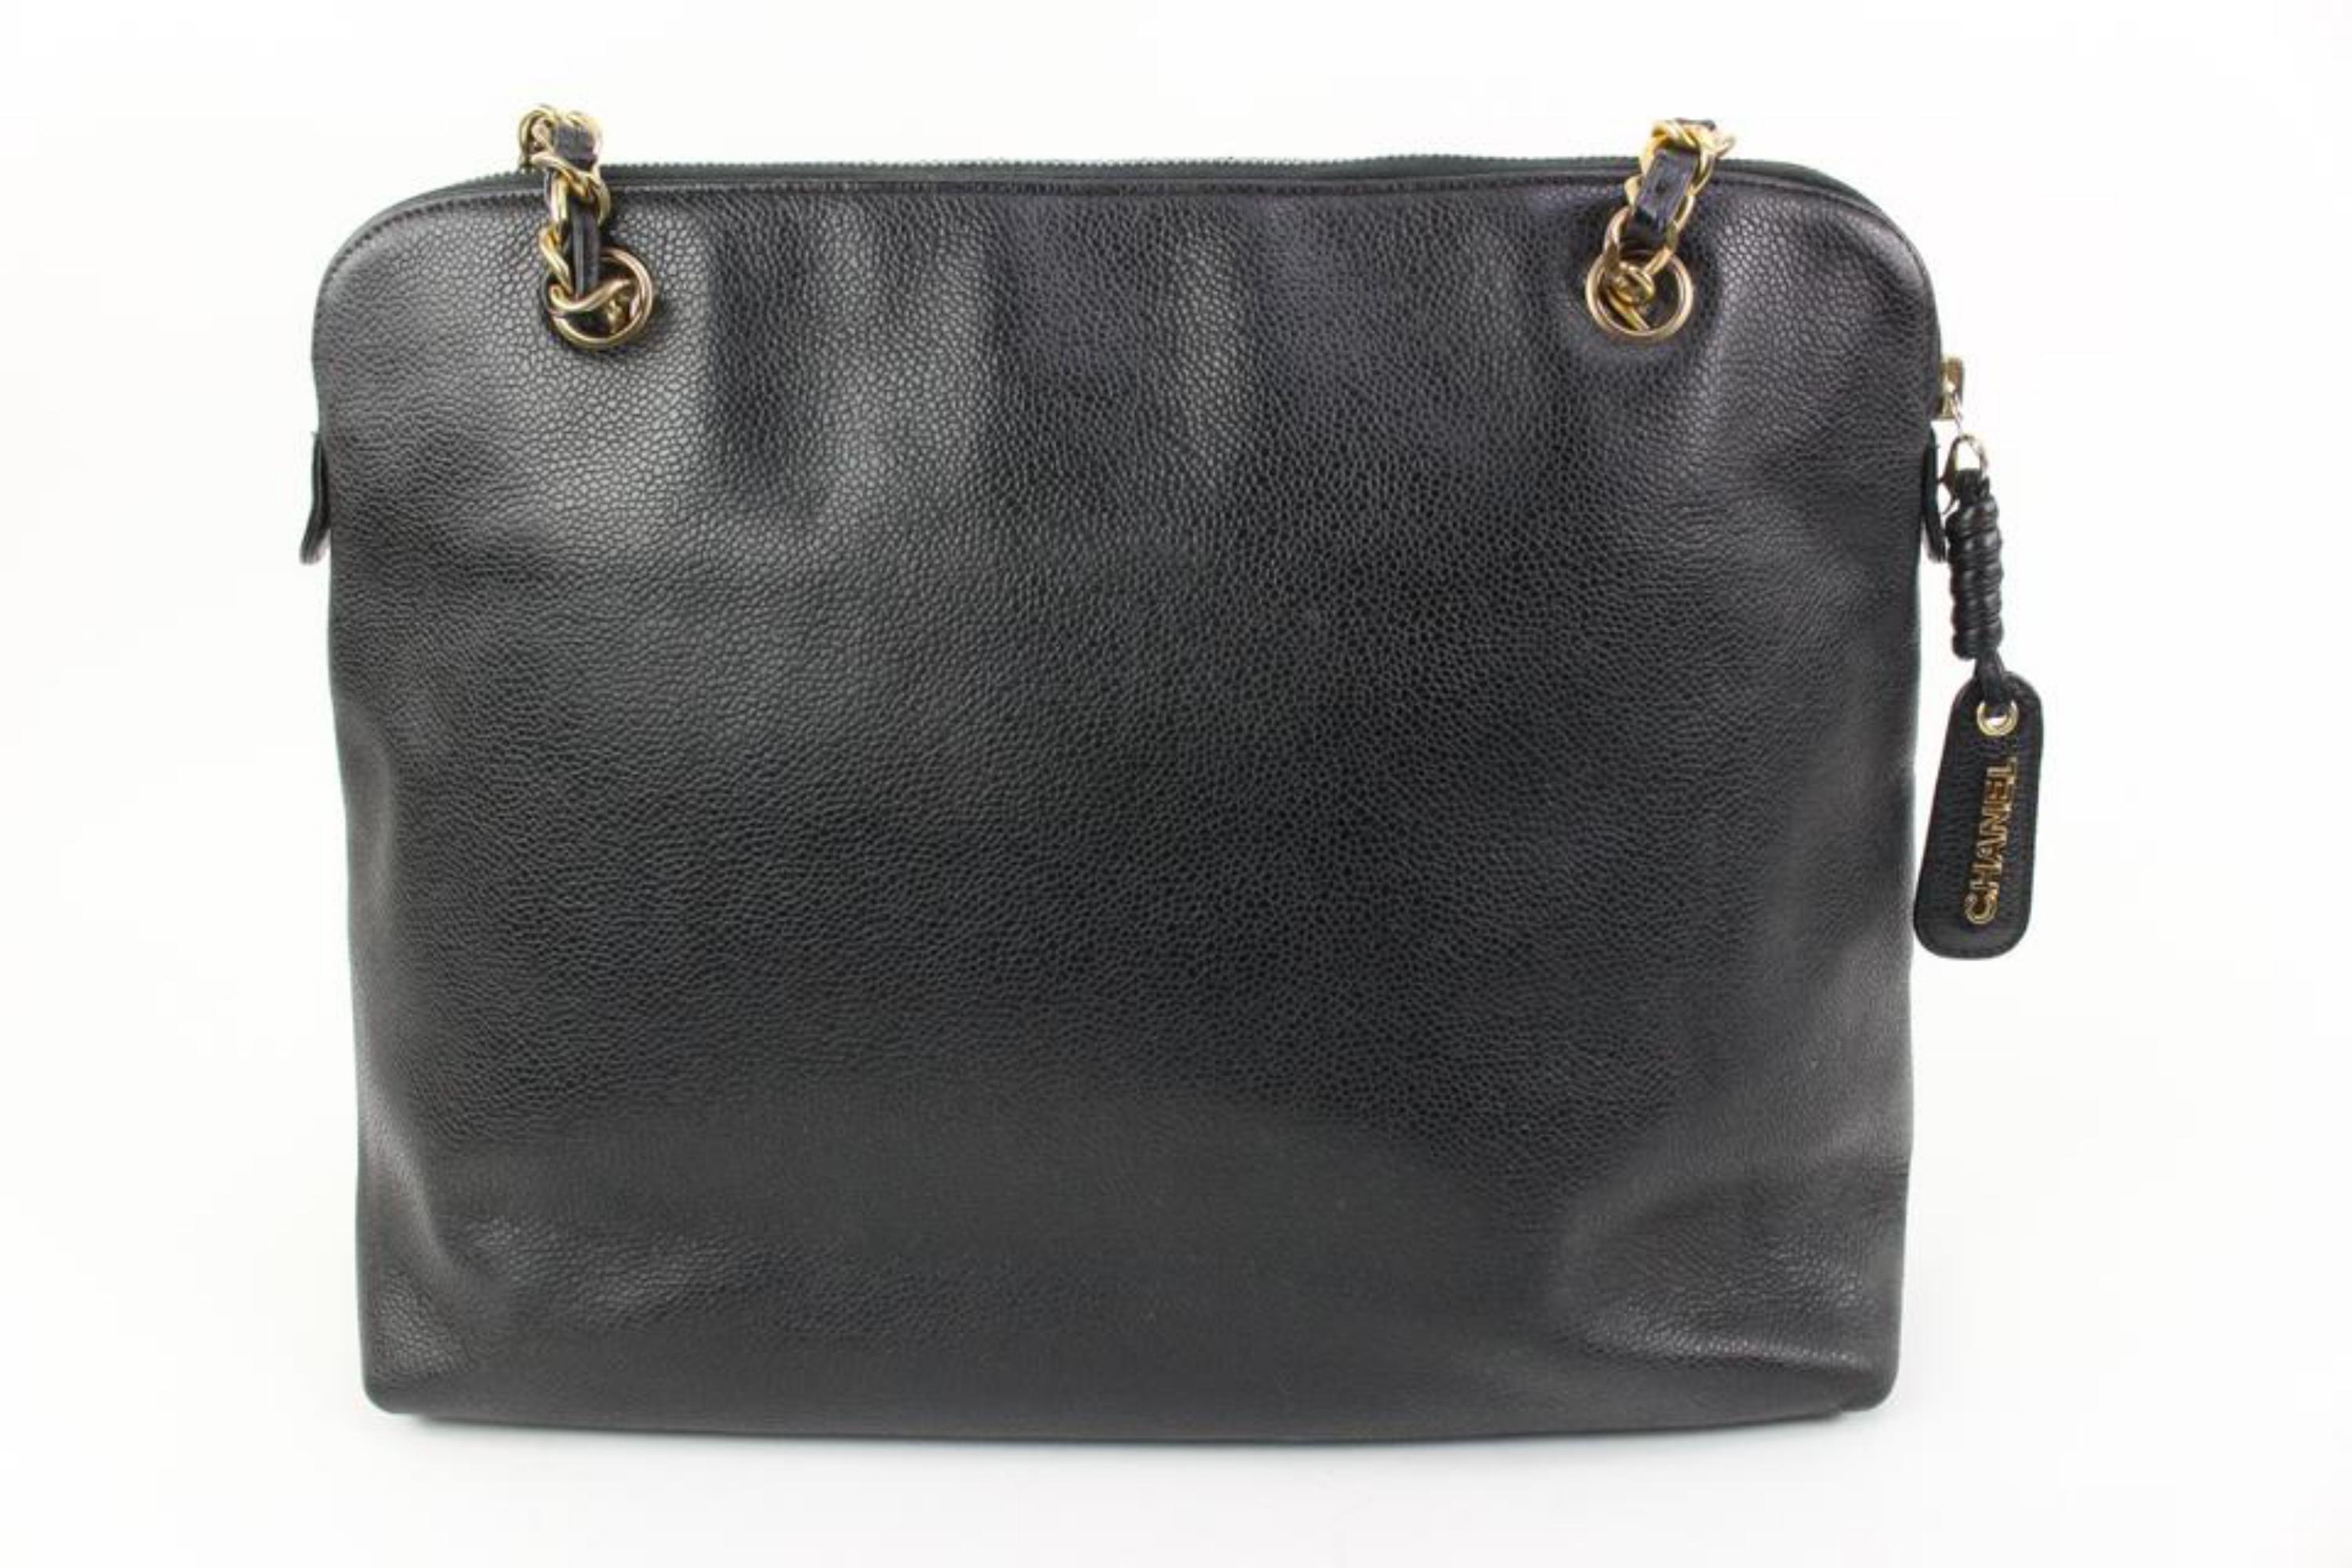 Chanel Black Caviar Leather CC Turnlock Zip Tote Shoulder Bag 54ck315s 5